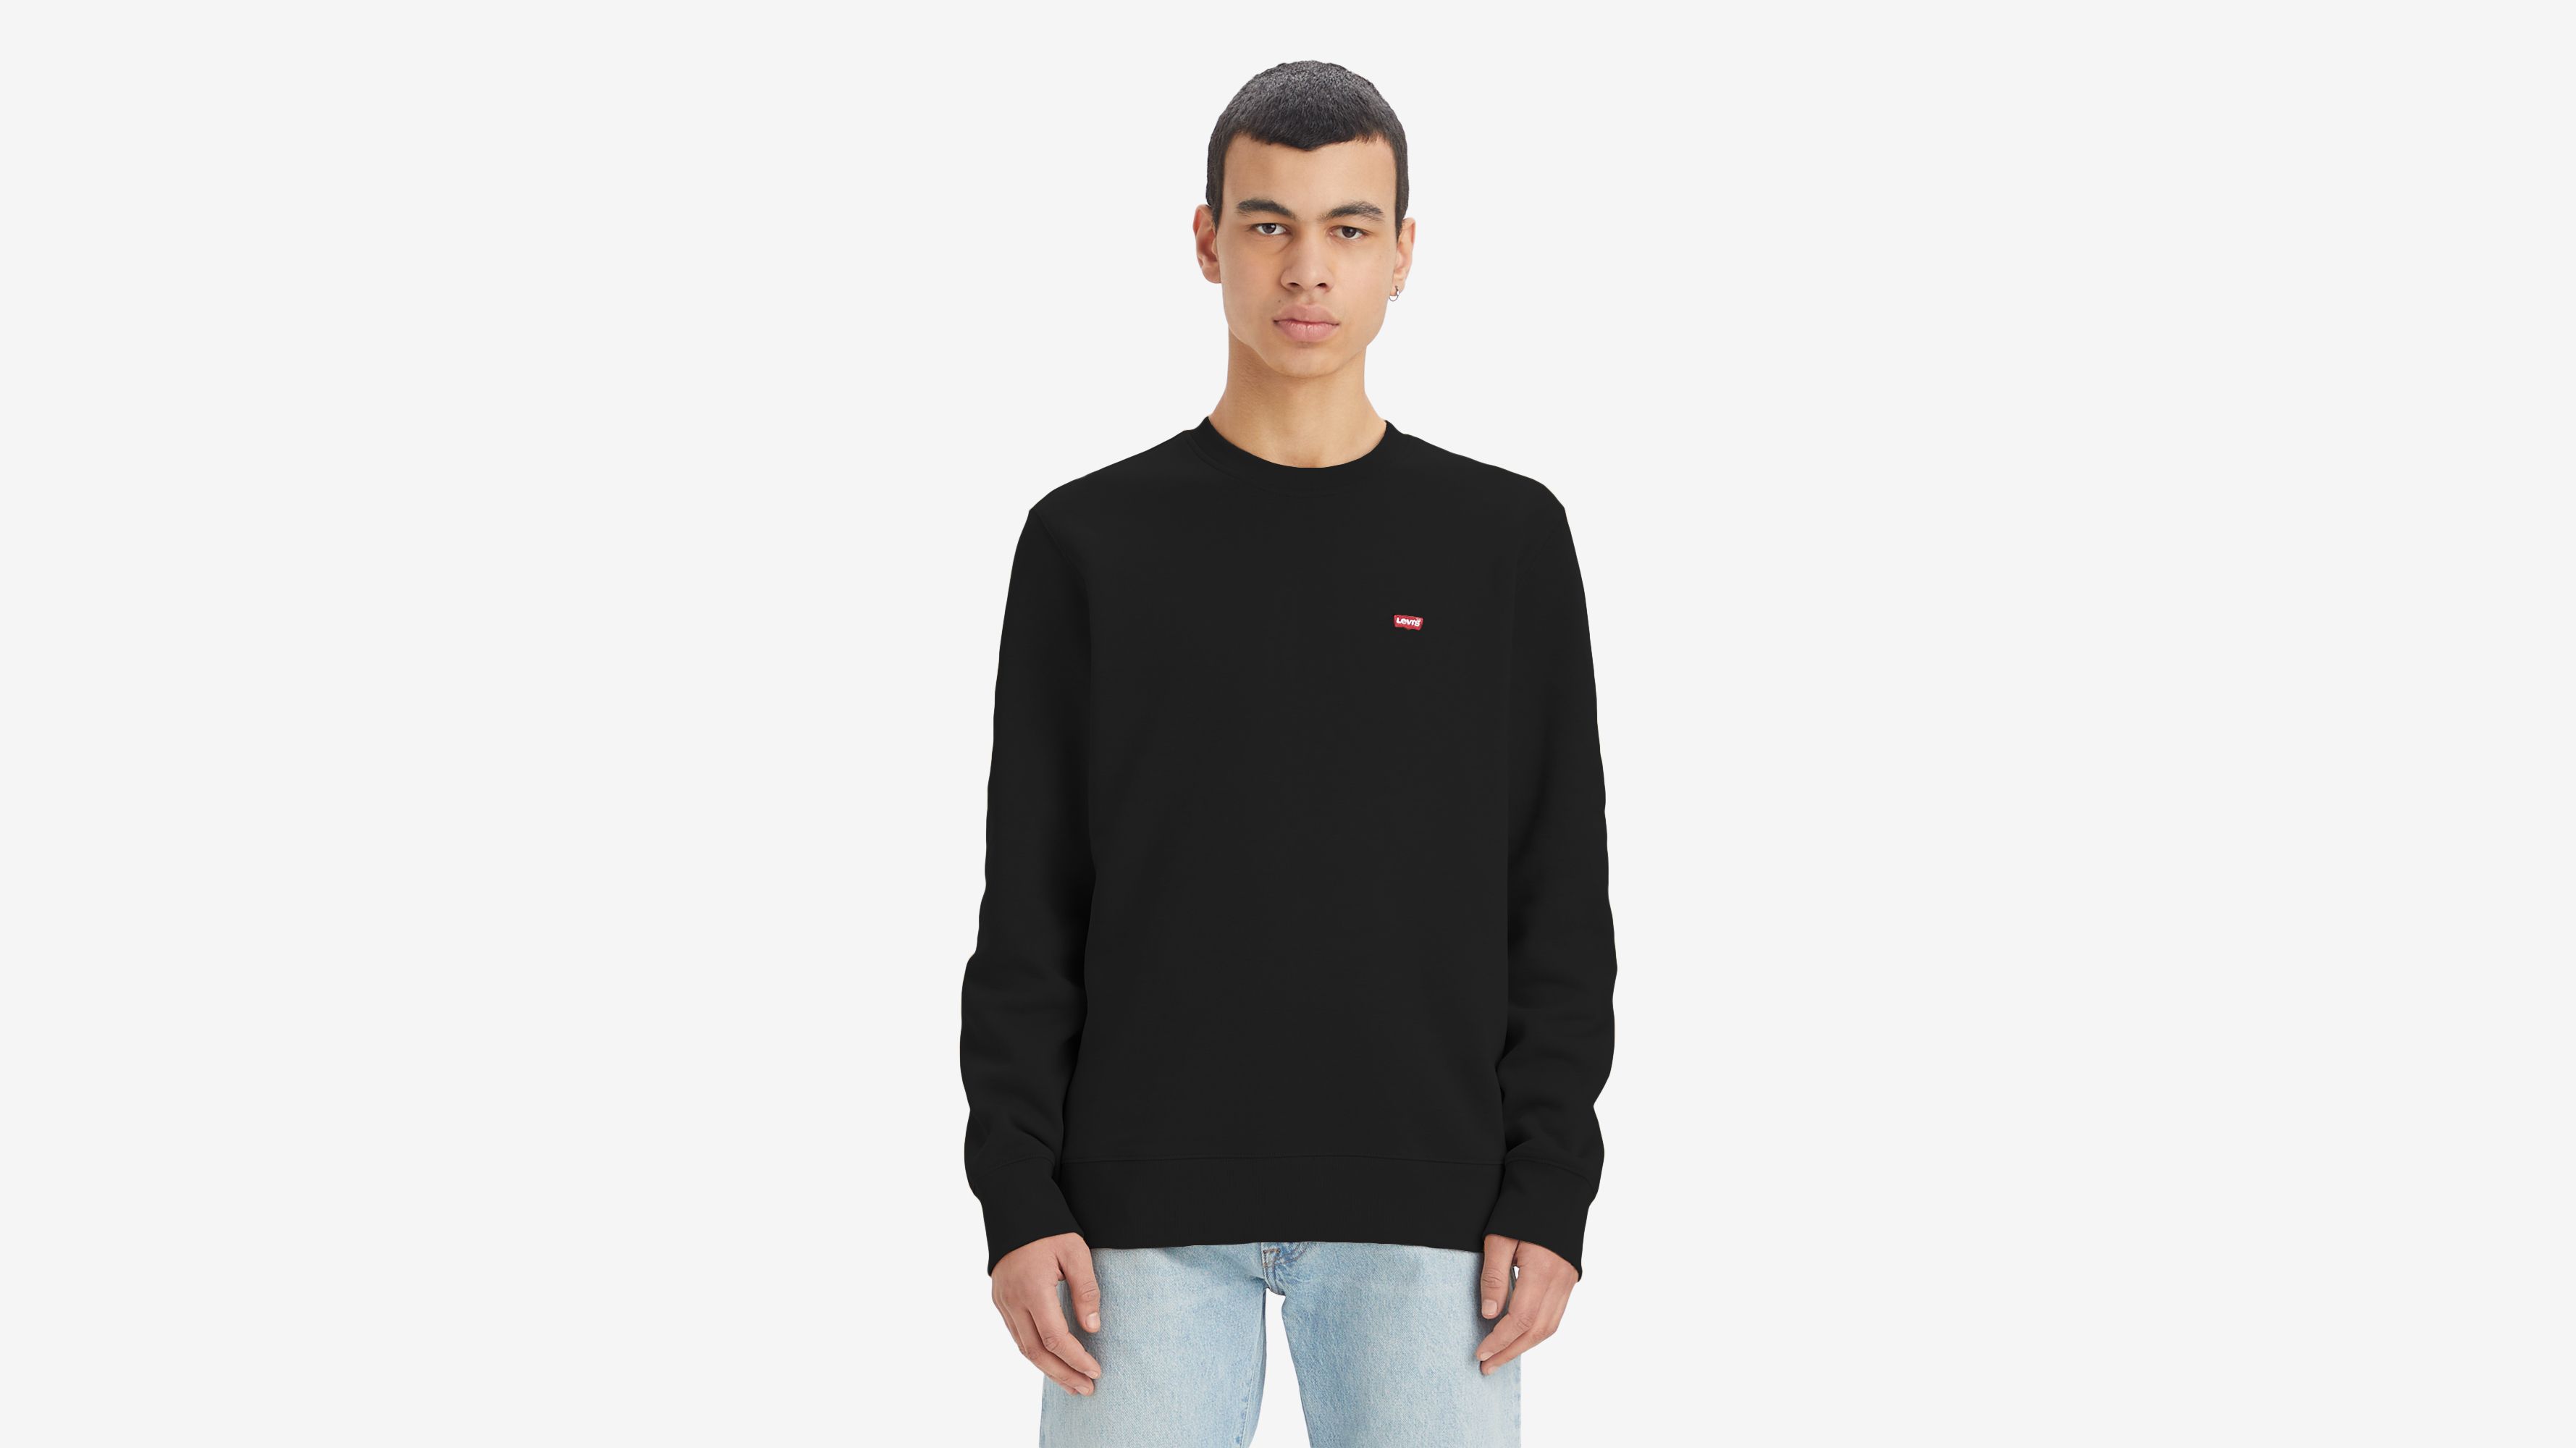 black levi sweatshirt